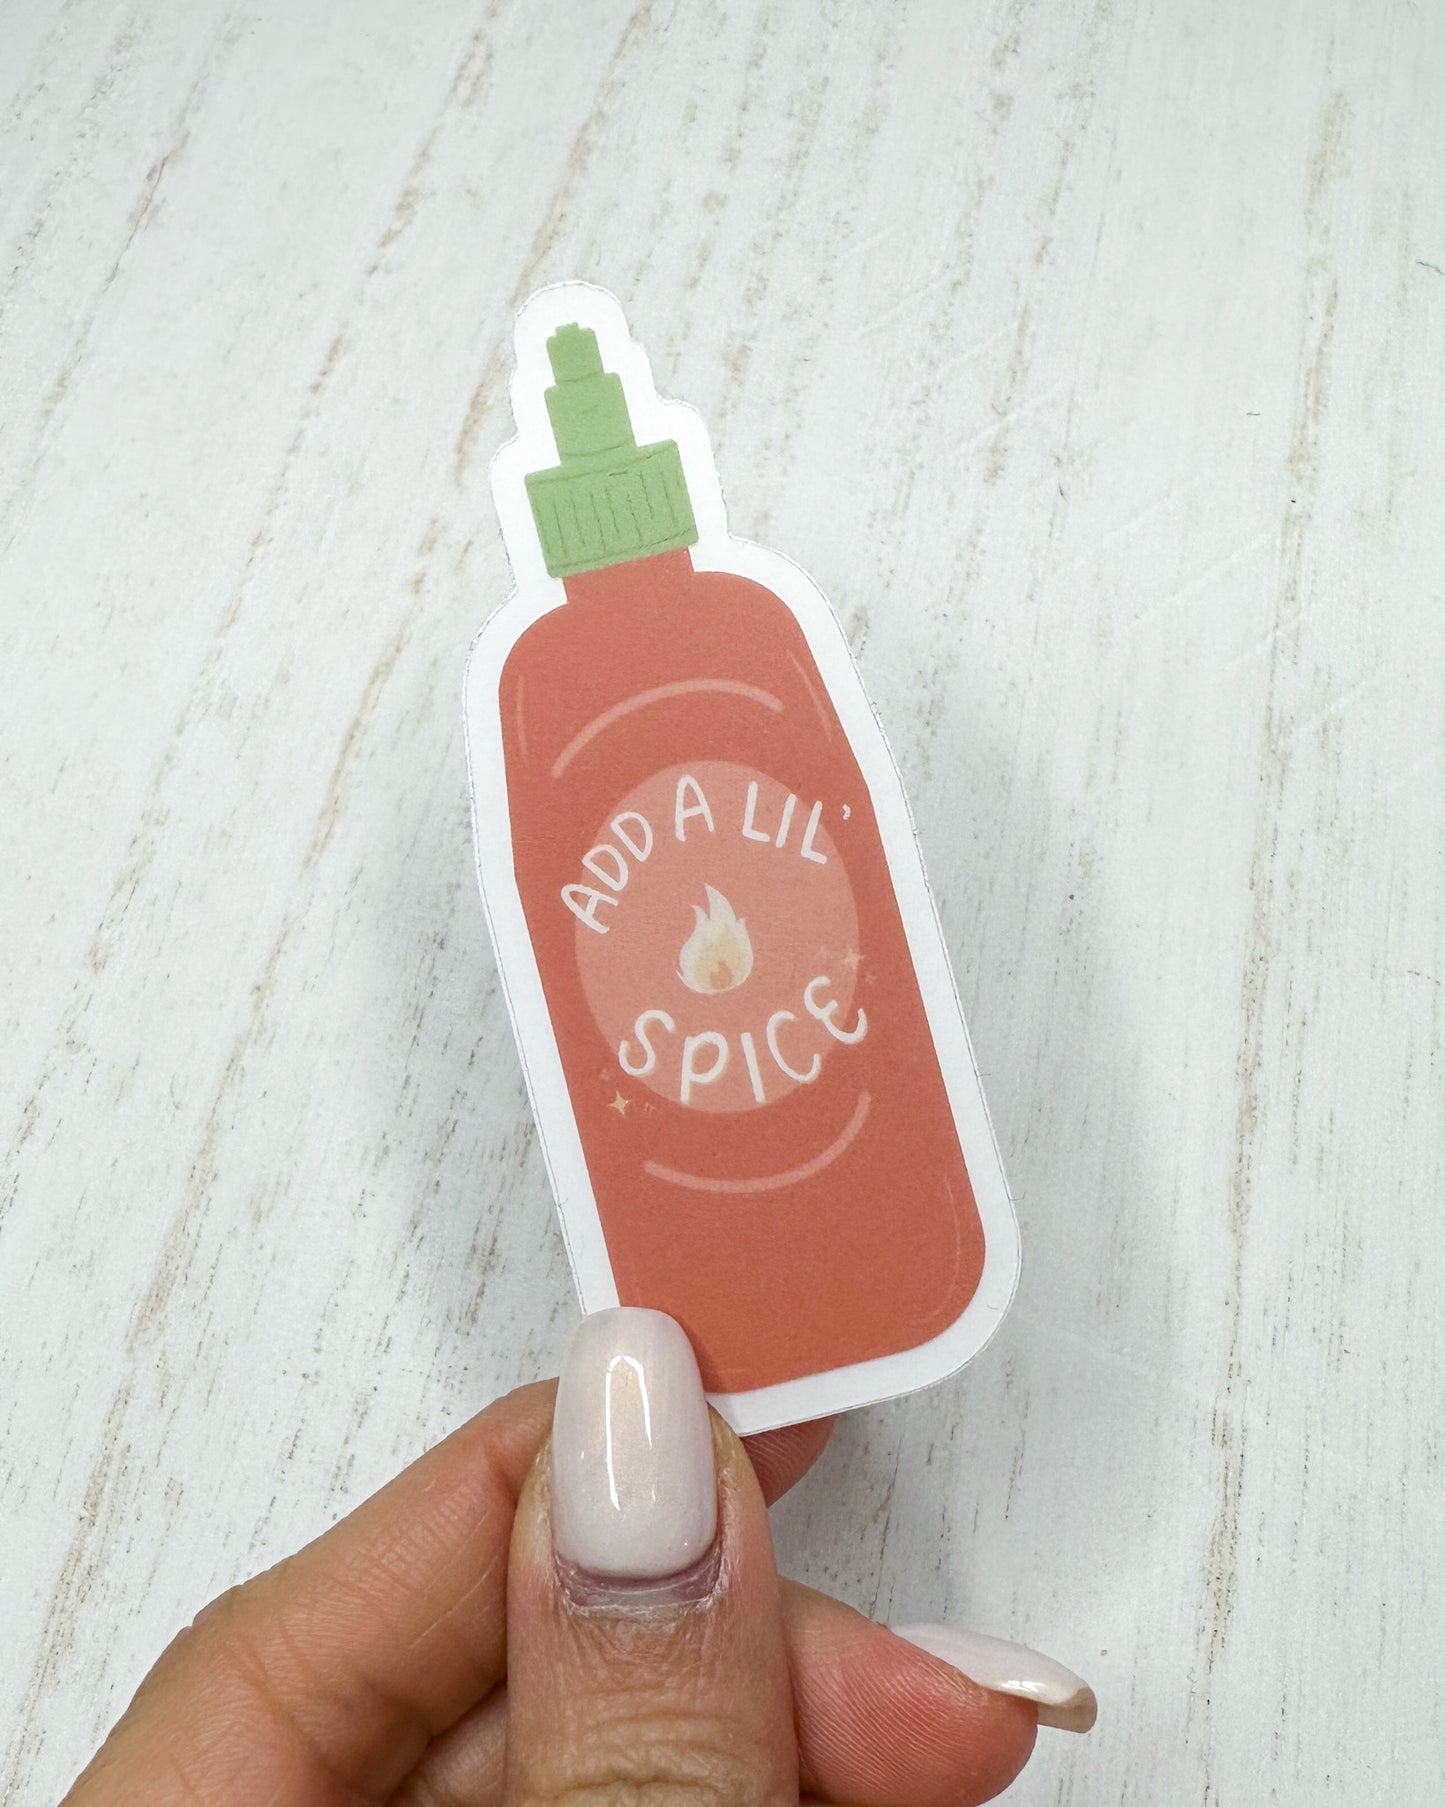 Sriracha hot sauce bottle sticker